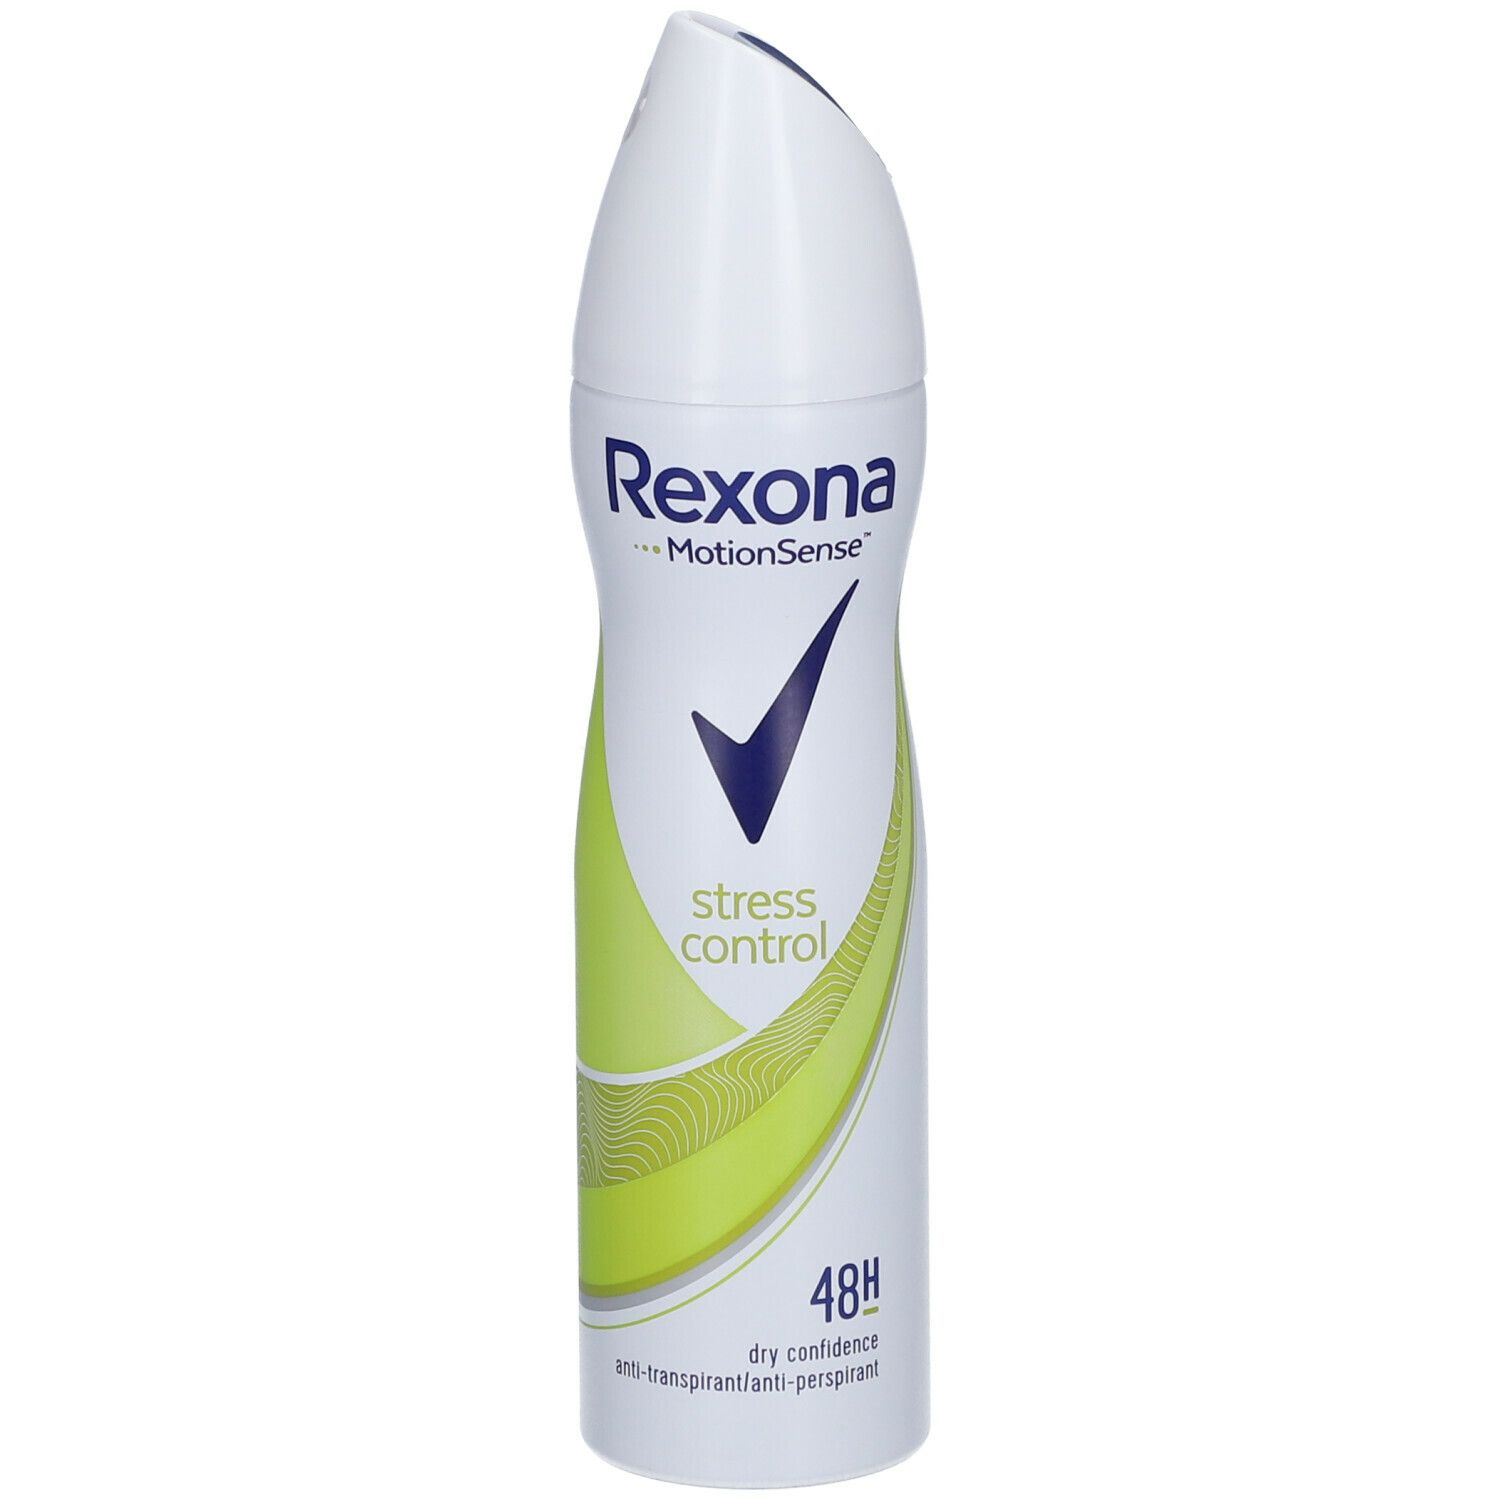 Rexona MotionSense™ Stress Control Anti-Transpirant Déodorant Spray 48h